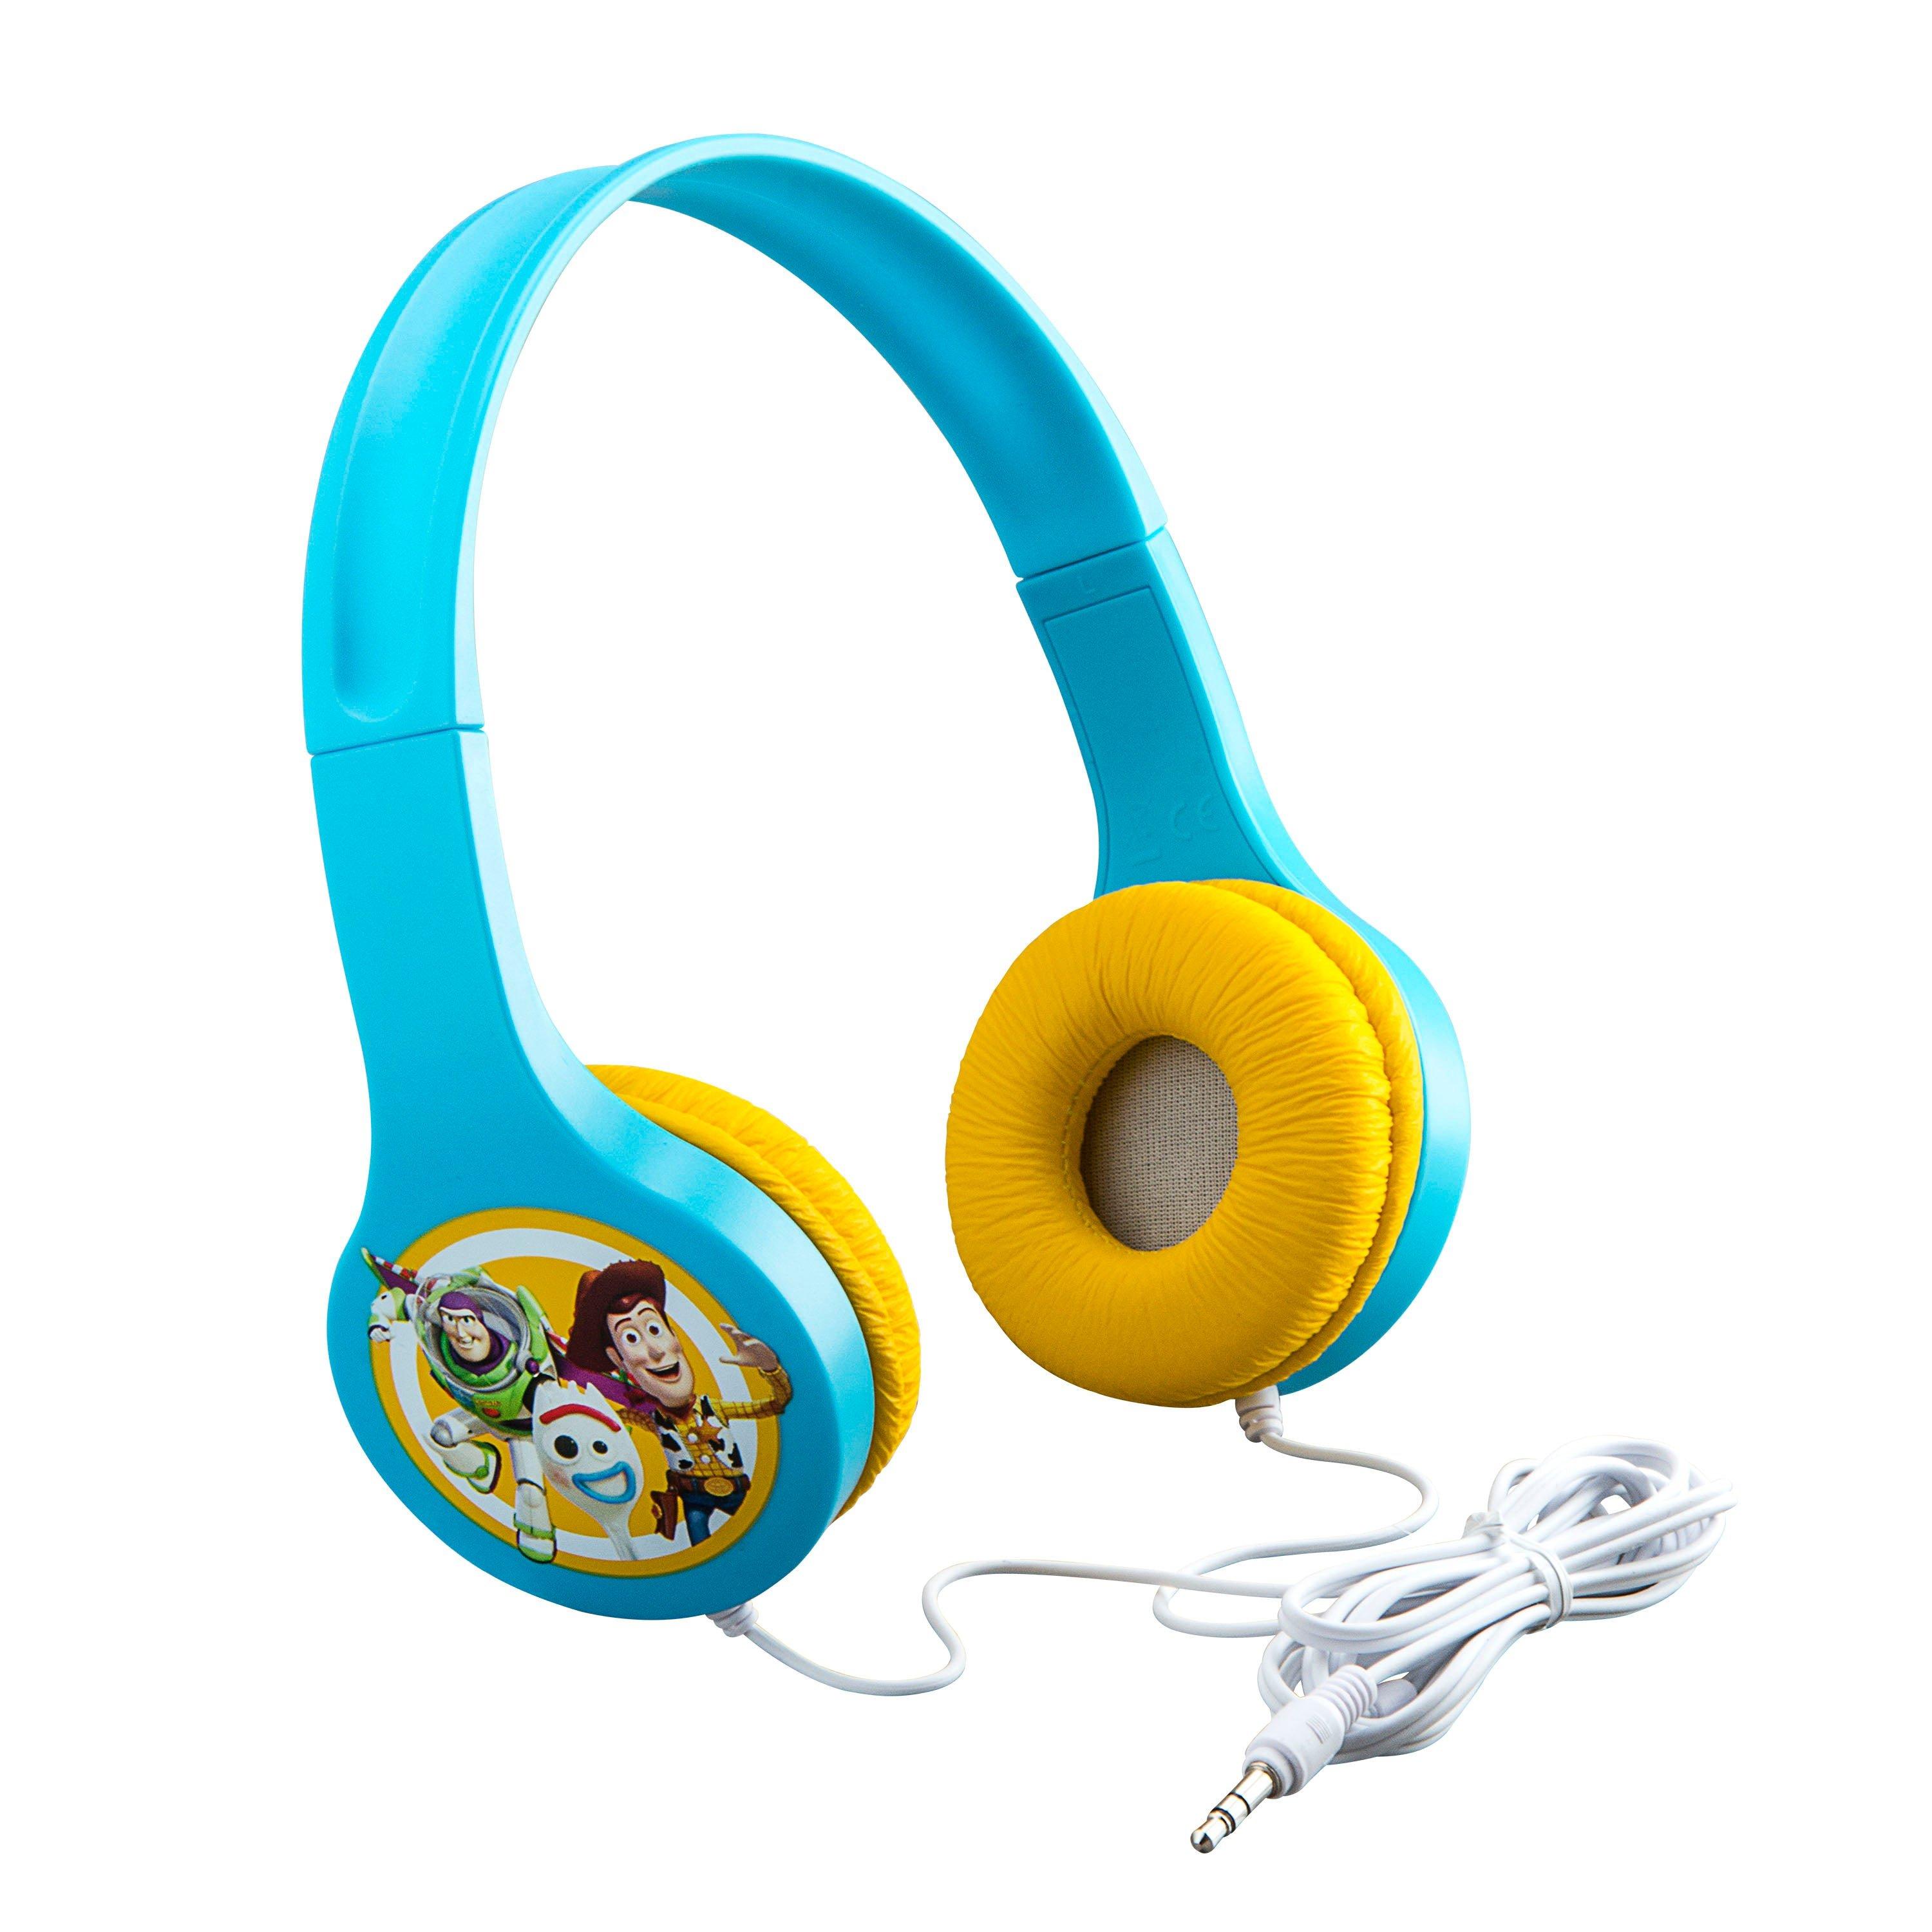 Headphones with Child Friendly Volume